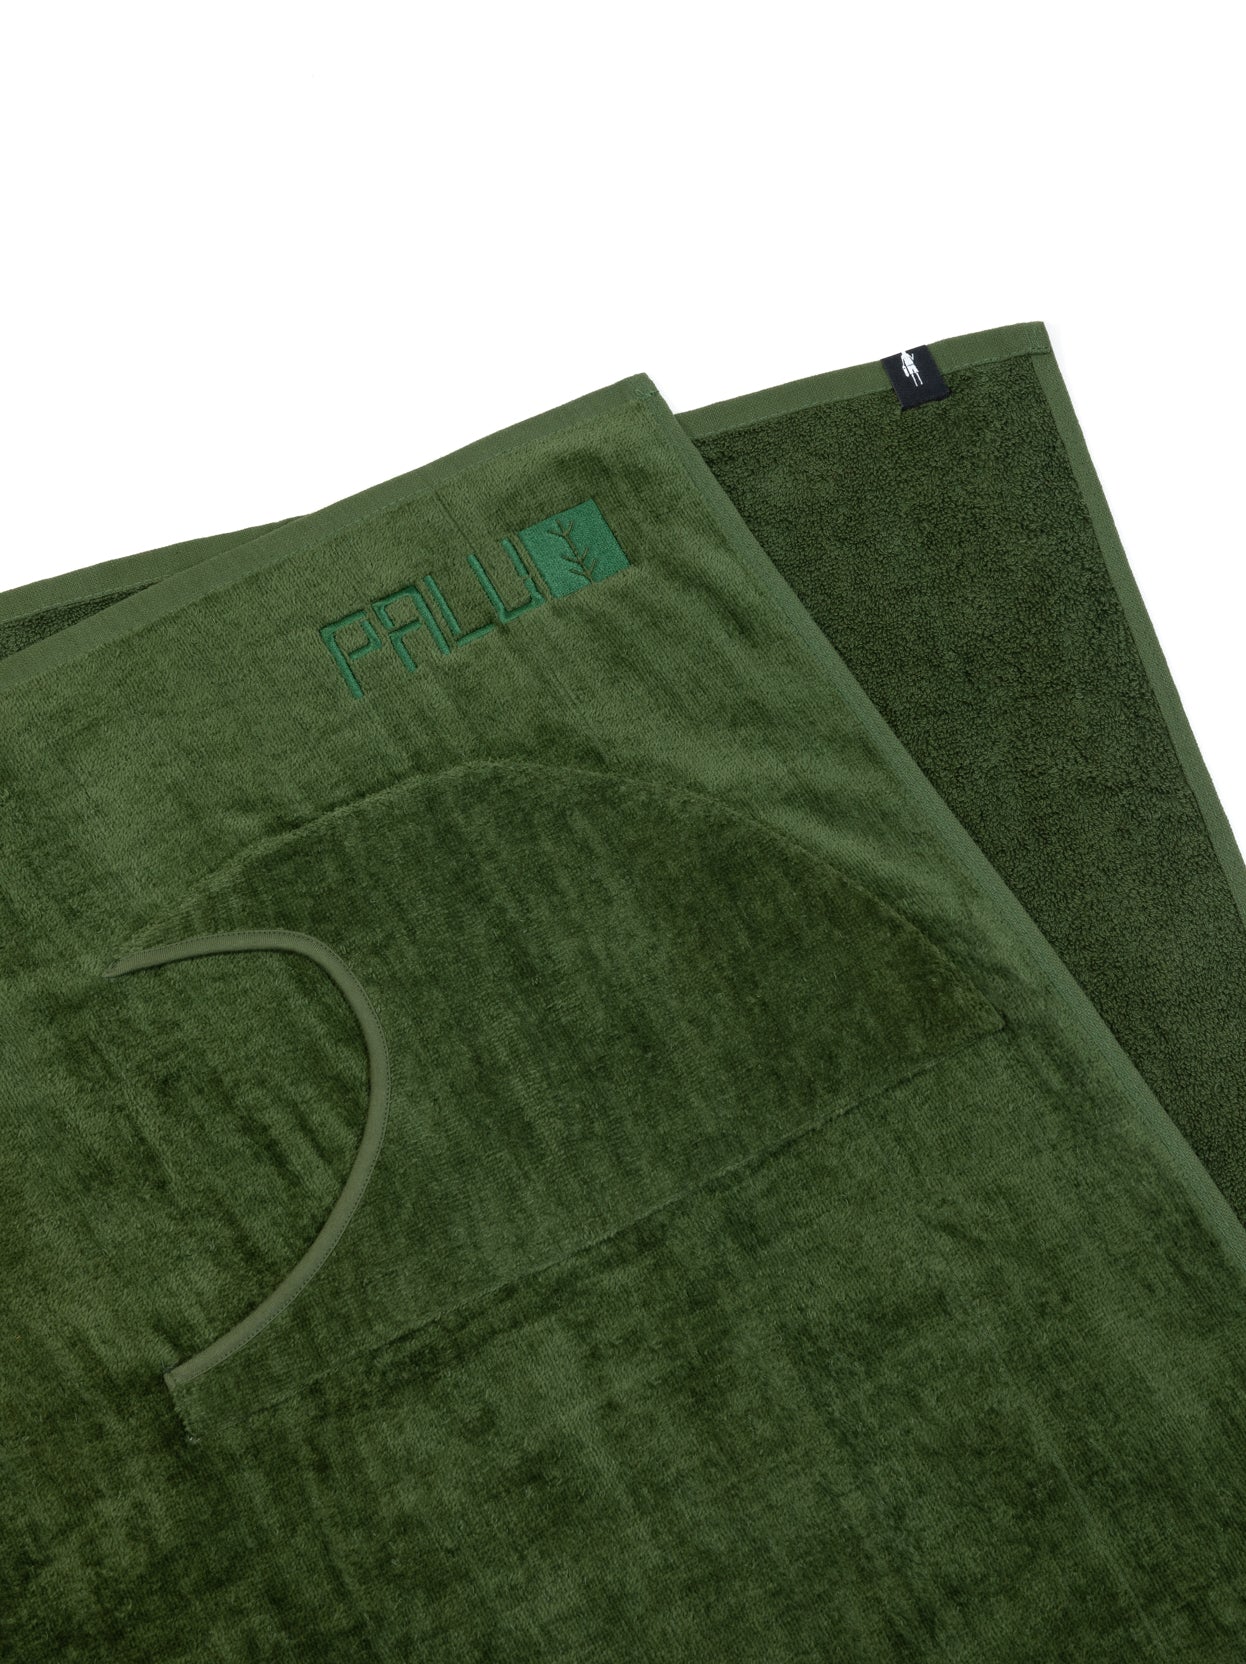 green wave towel fold